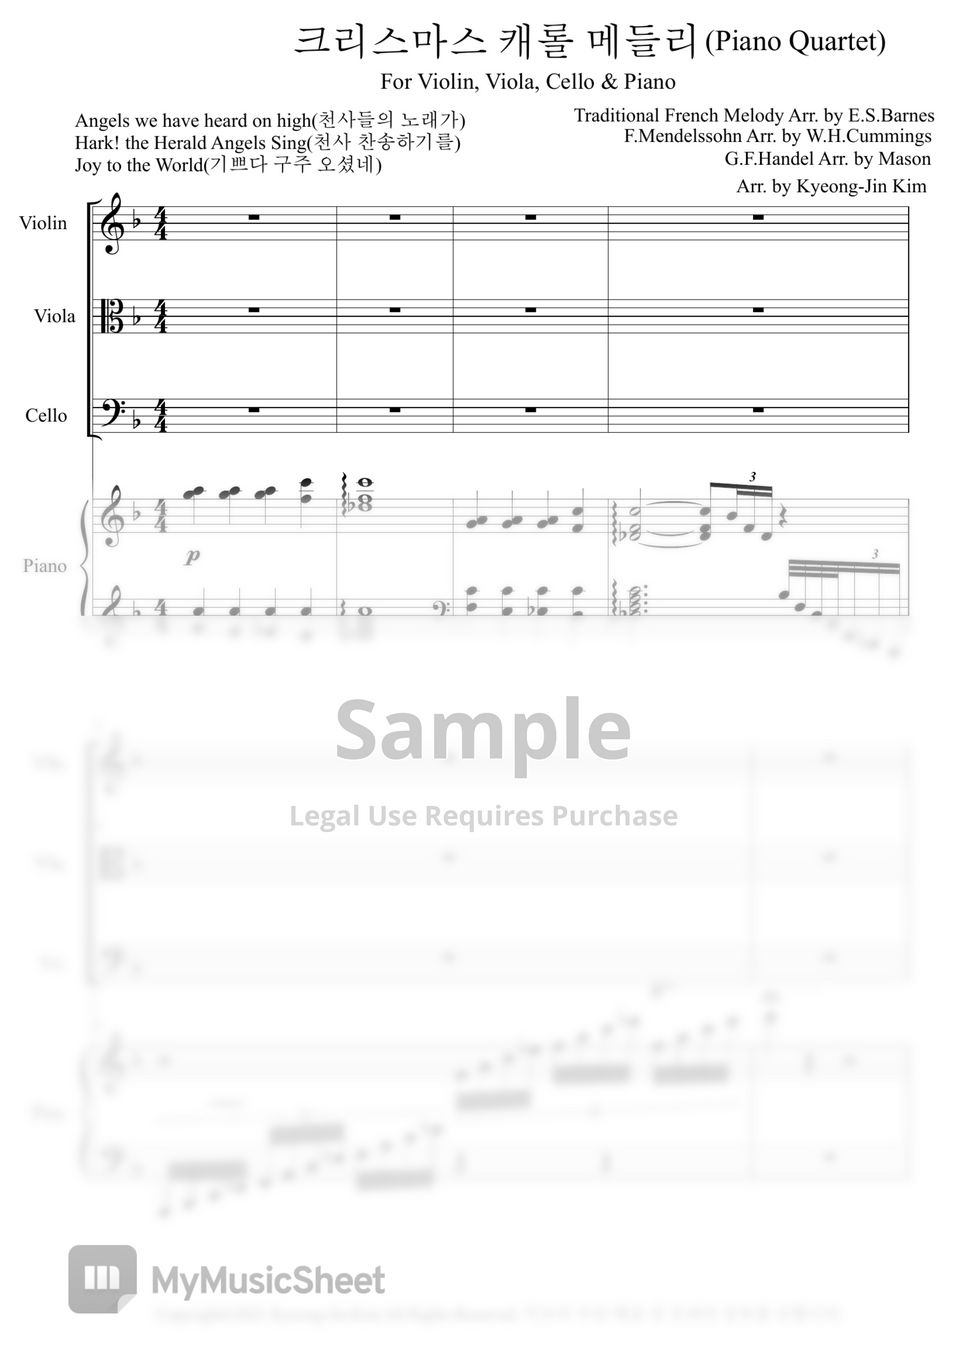 F.Mendelssohn - Carol Medley For Piano Quartet (Violin,Viola,Cello,Piano) by Pianist Jin